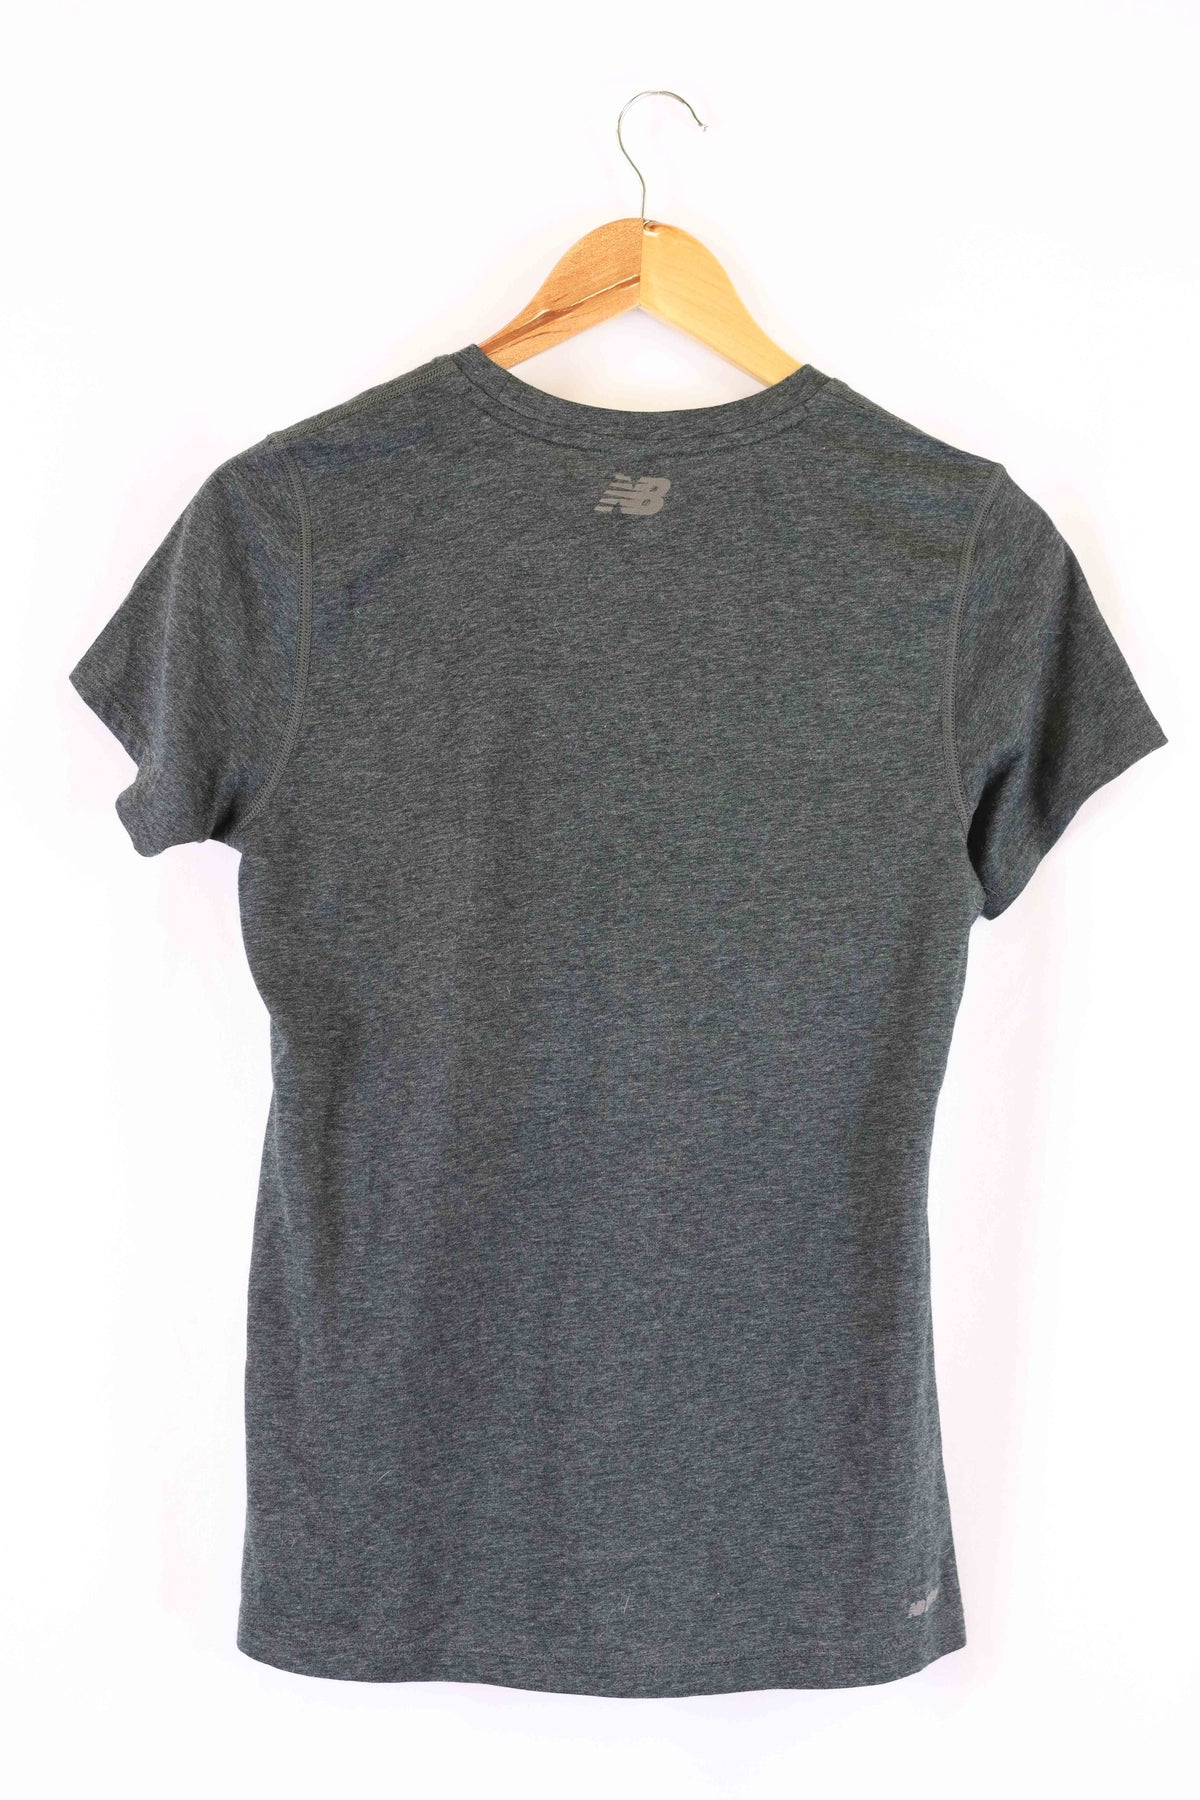 New Balance Grey T-Shirt 10